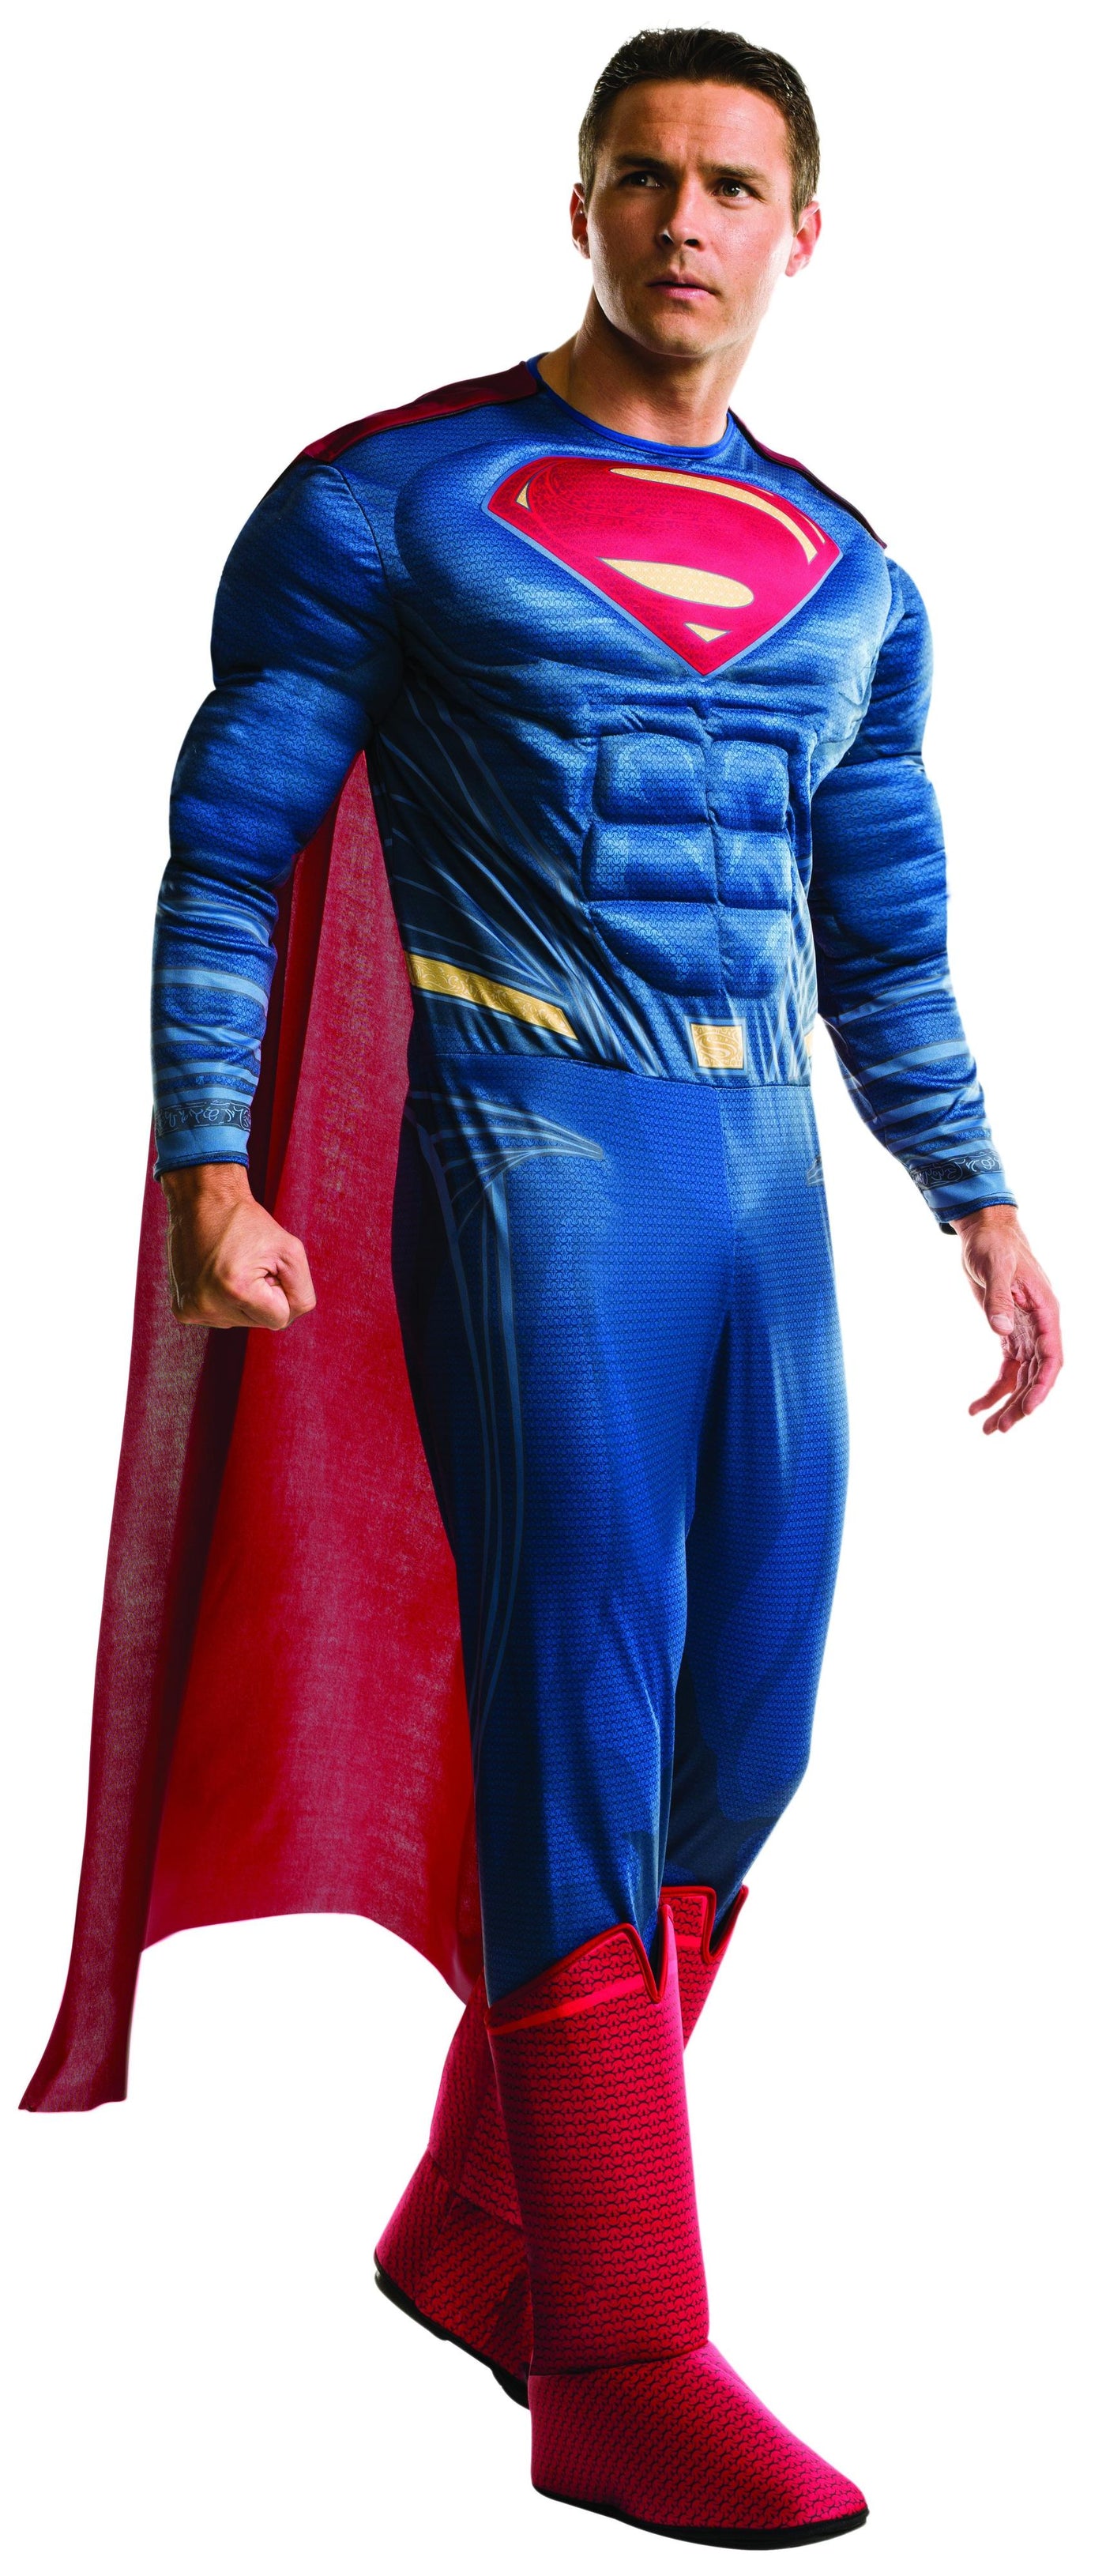 ADULT SUPERMAN MUSCLE 
COSTUME